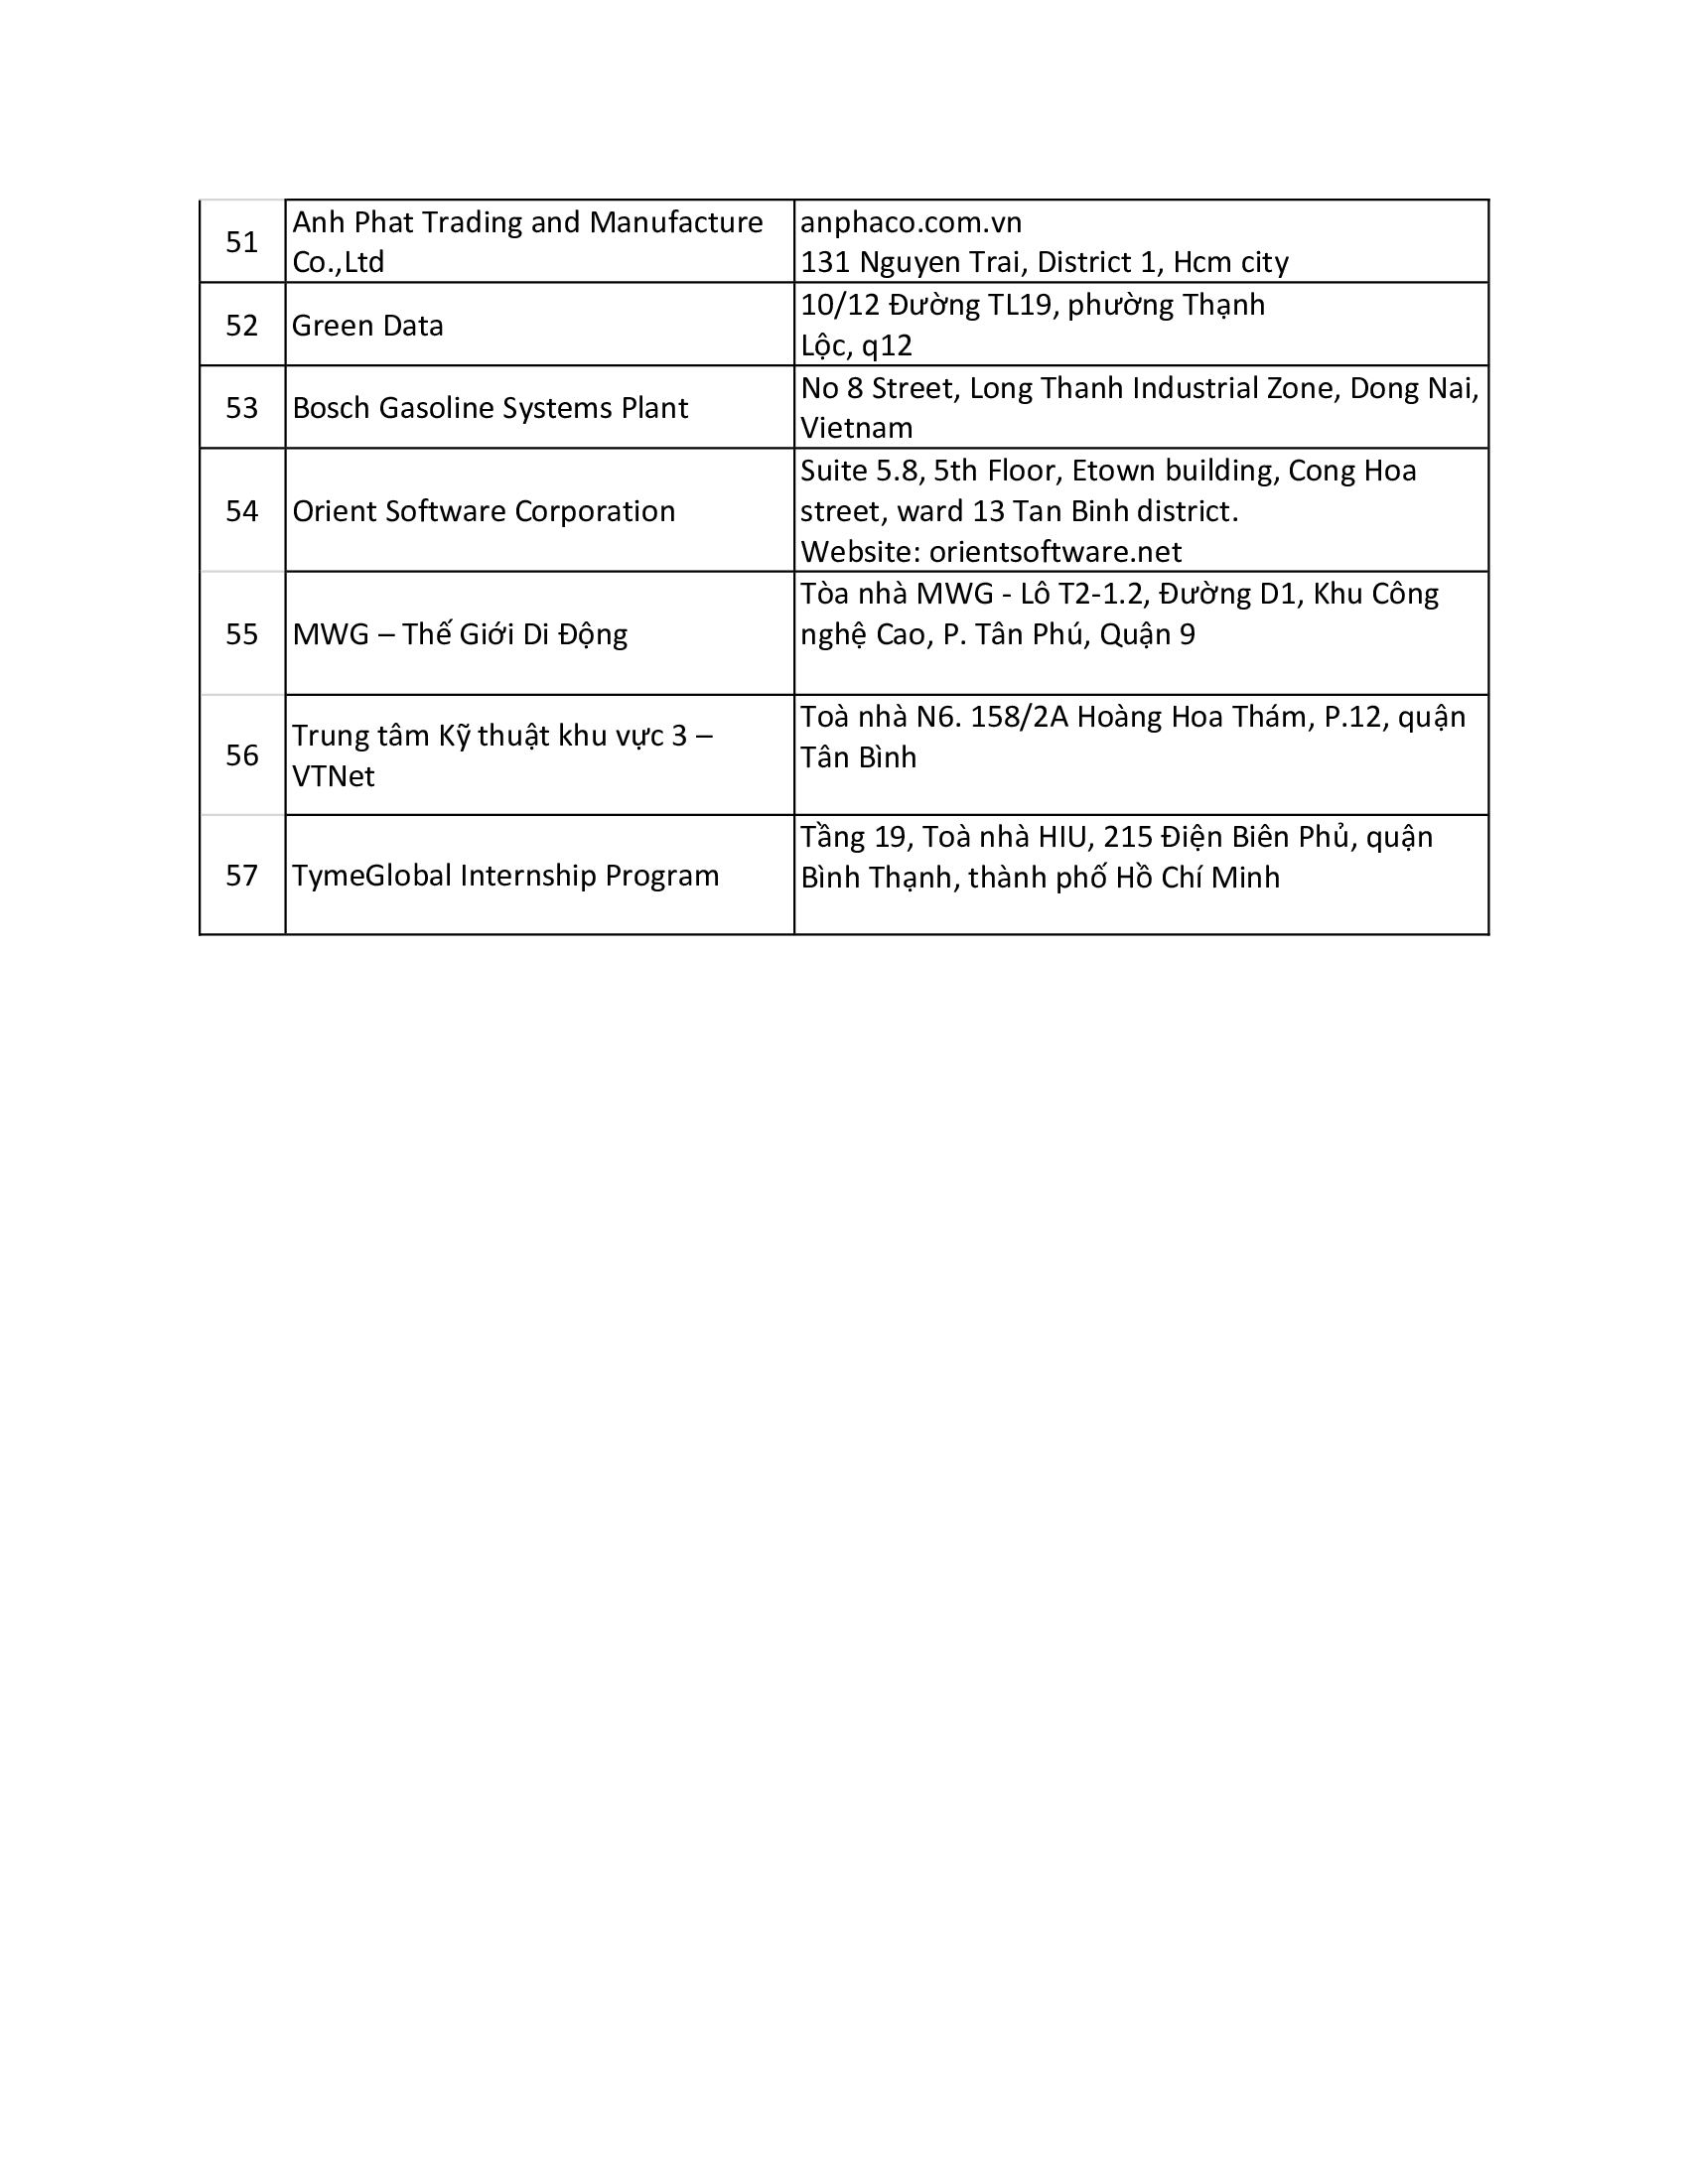 internship-2021 - School of Computer Science and Engineering